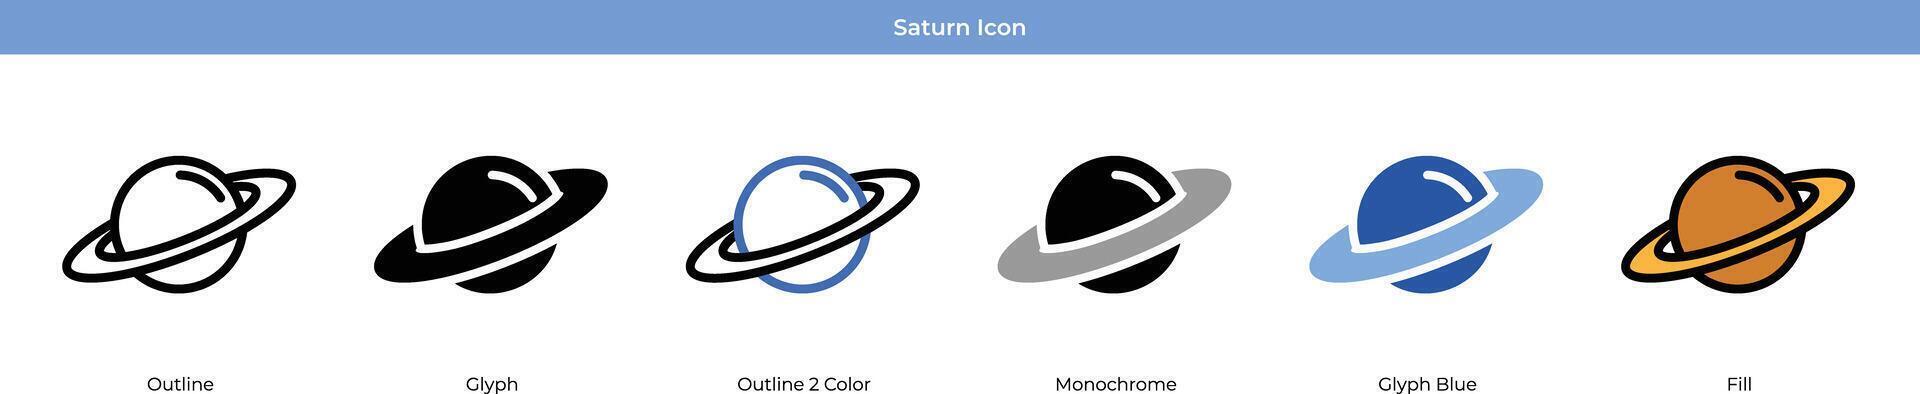 Saturn Icon Set vector